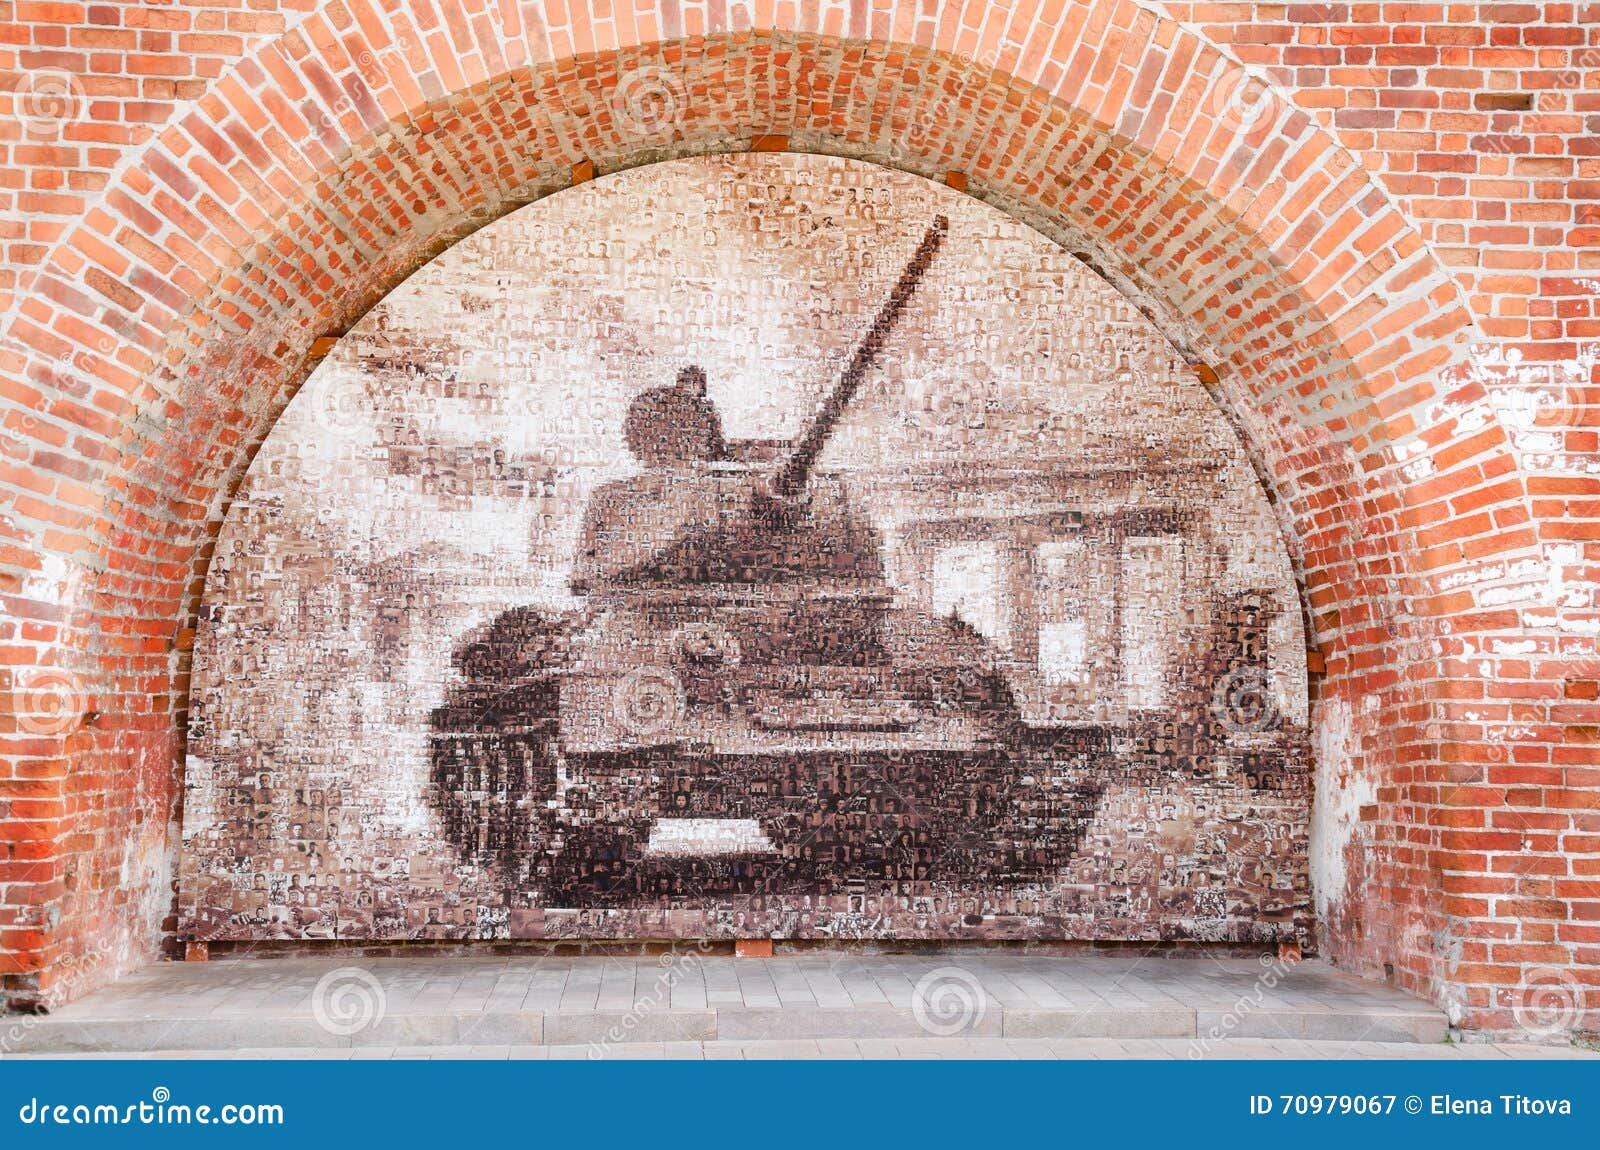 legendary-t-tank-mosaic-old-frontline-photos-nizhny-novgorod-russia-august-70979067.jpg